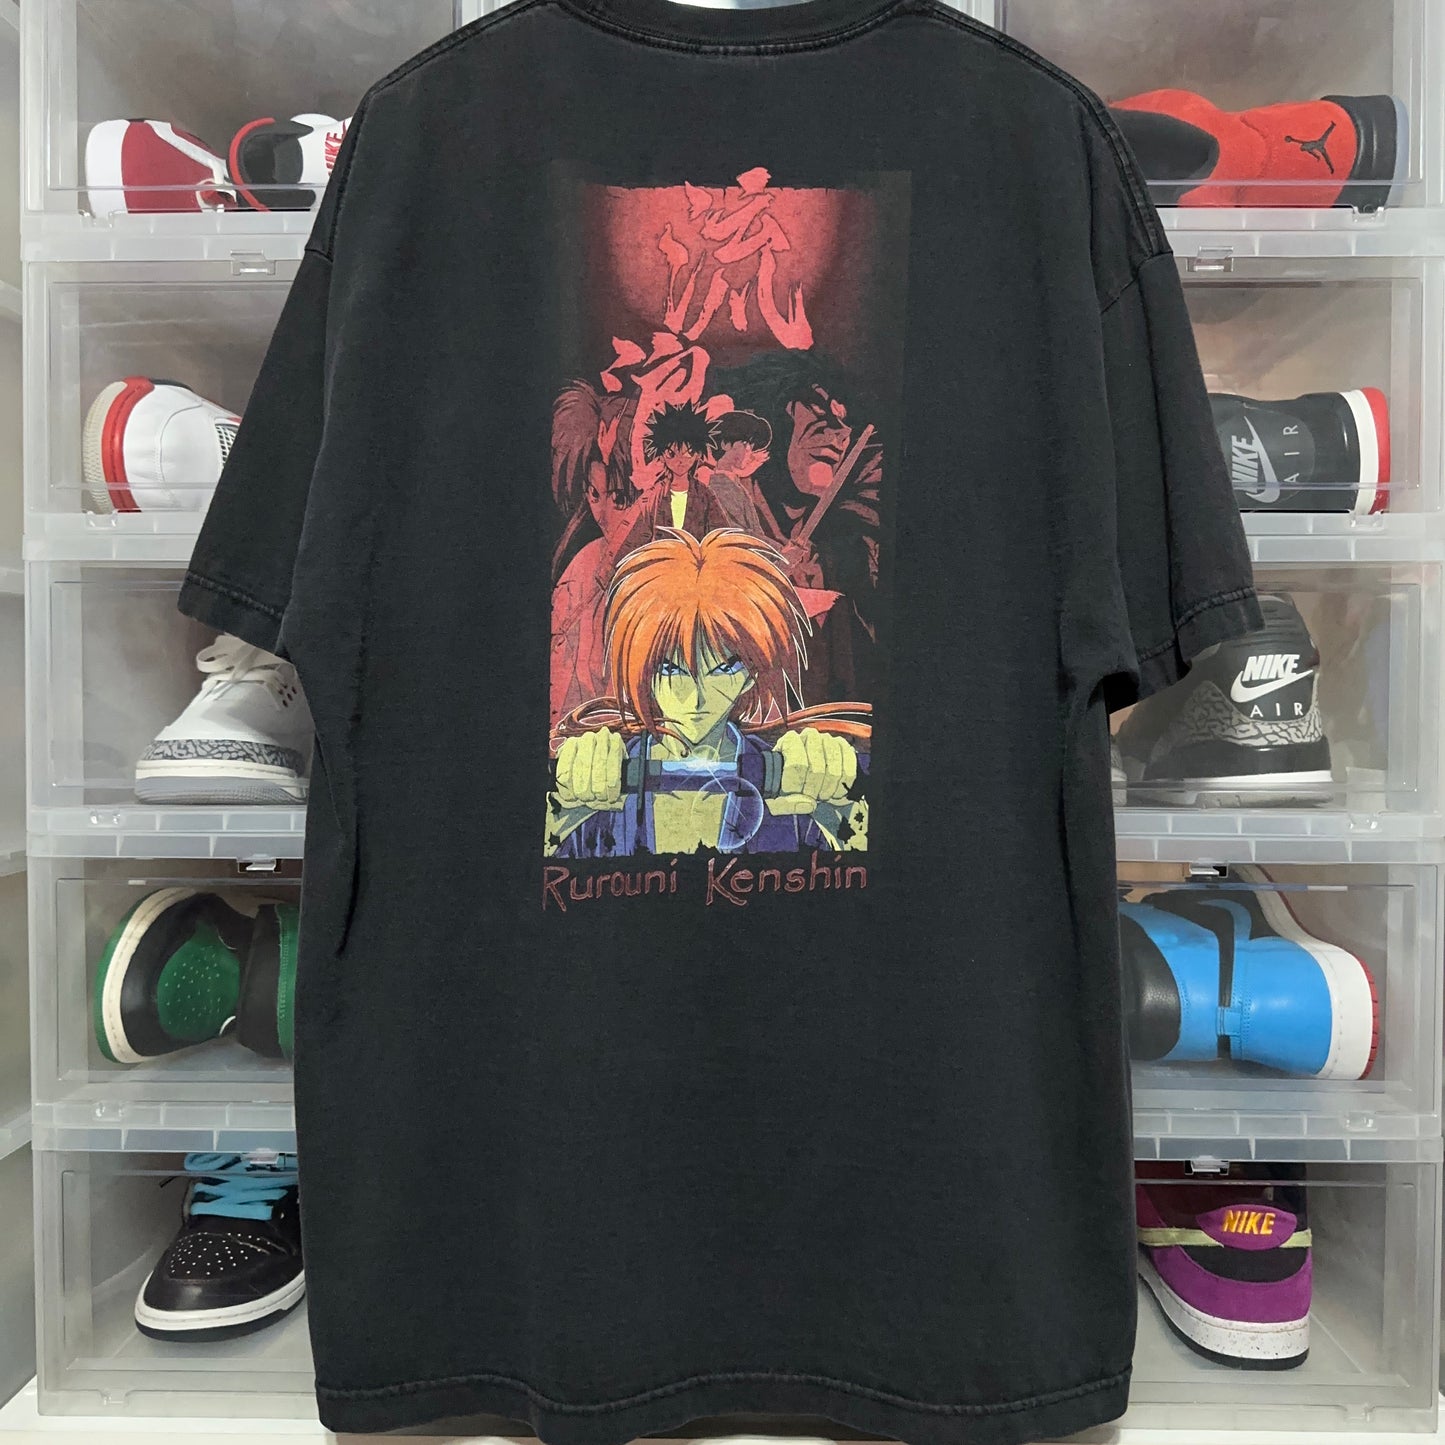 Vintage Rurouni Kenshin Anime Promo T-Shirt XXL